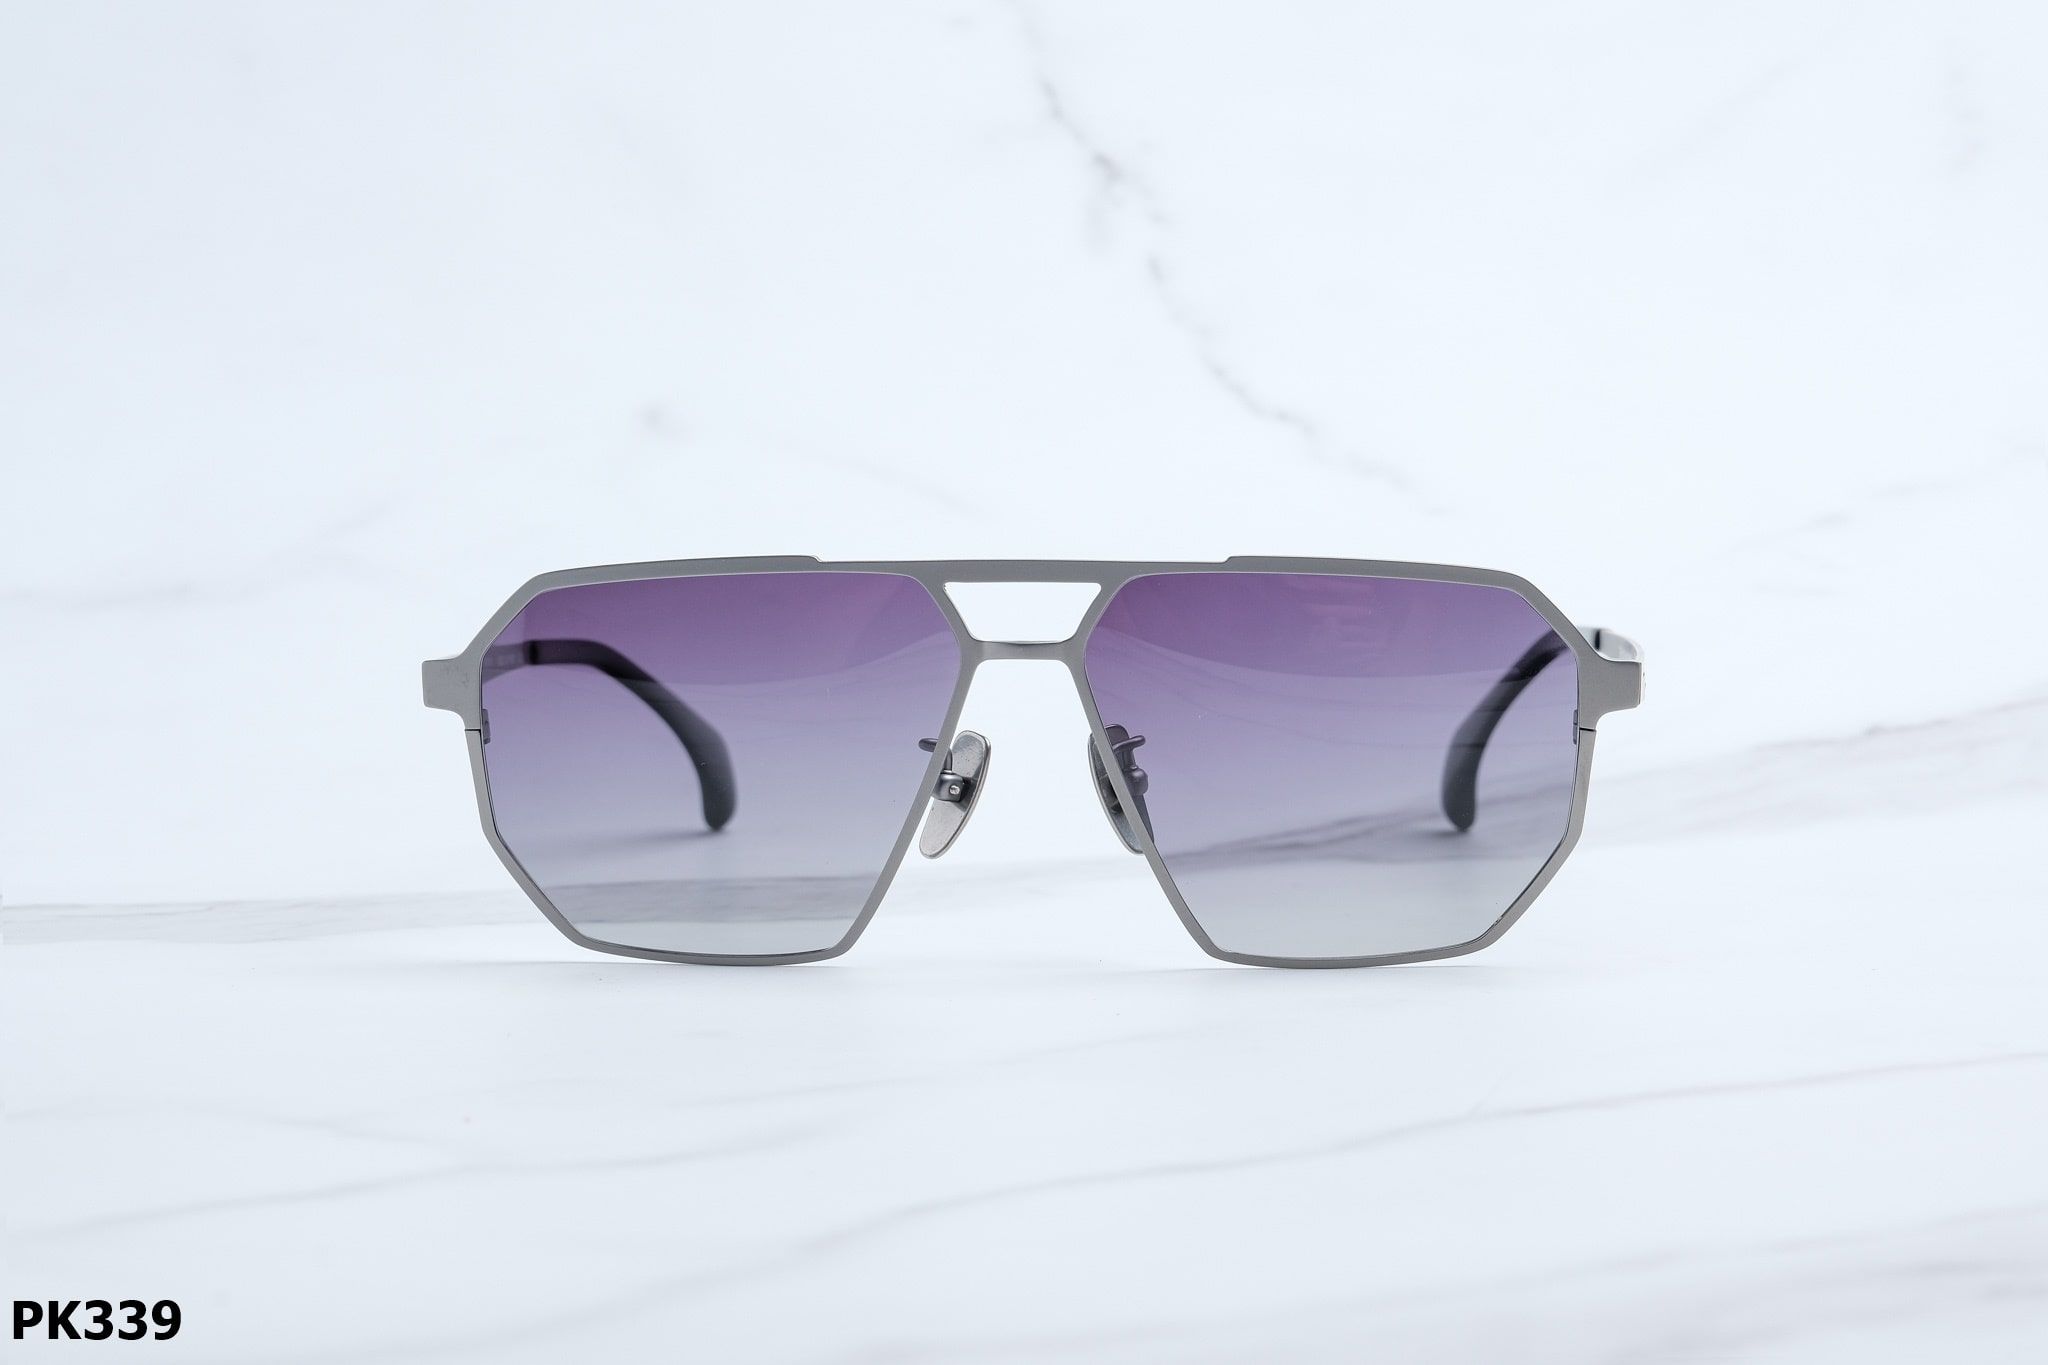  SHADY Eyewear - Sunglasses - PK339 